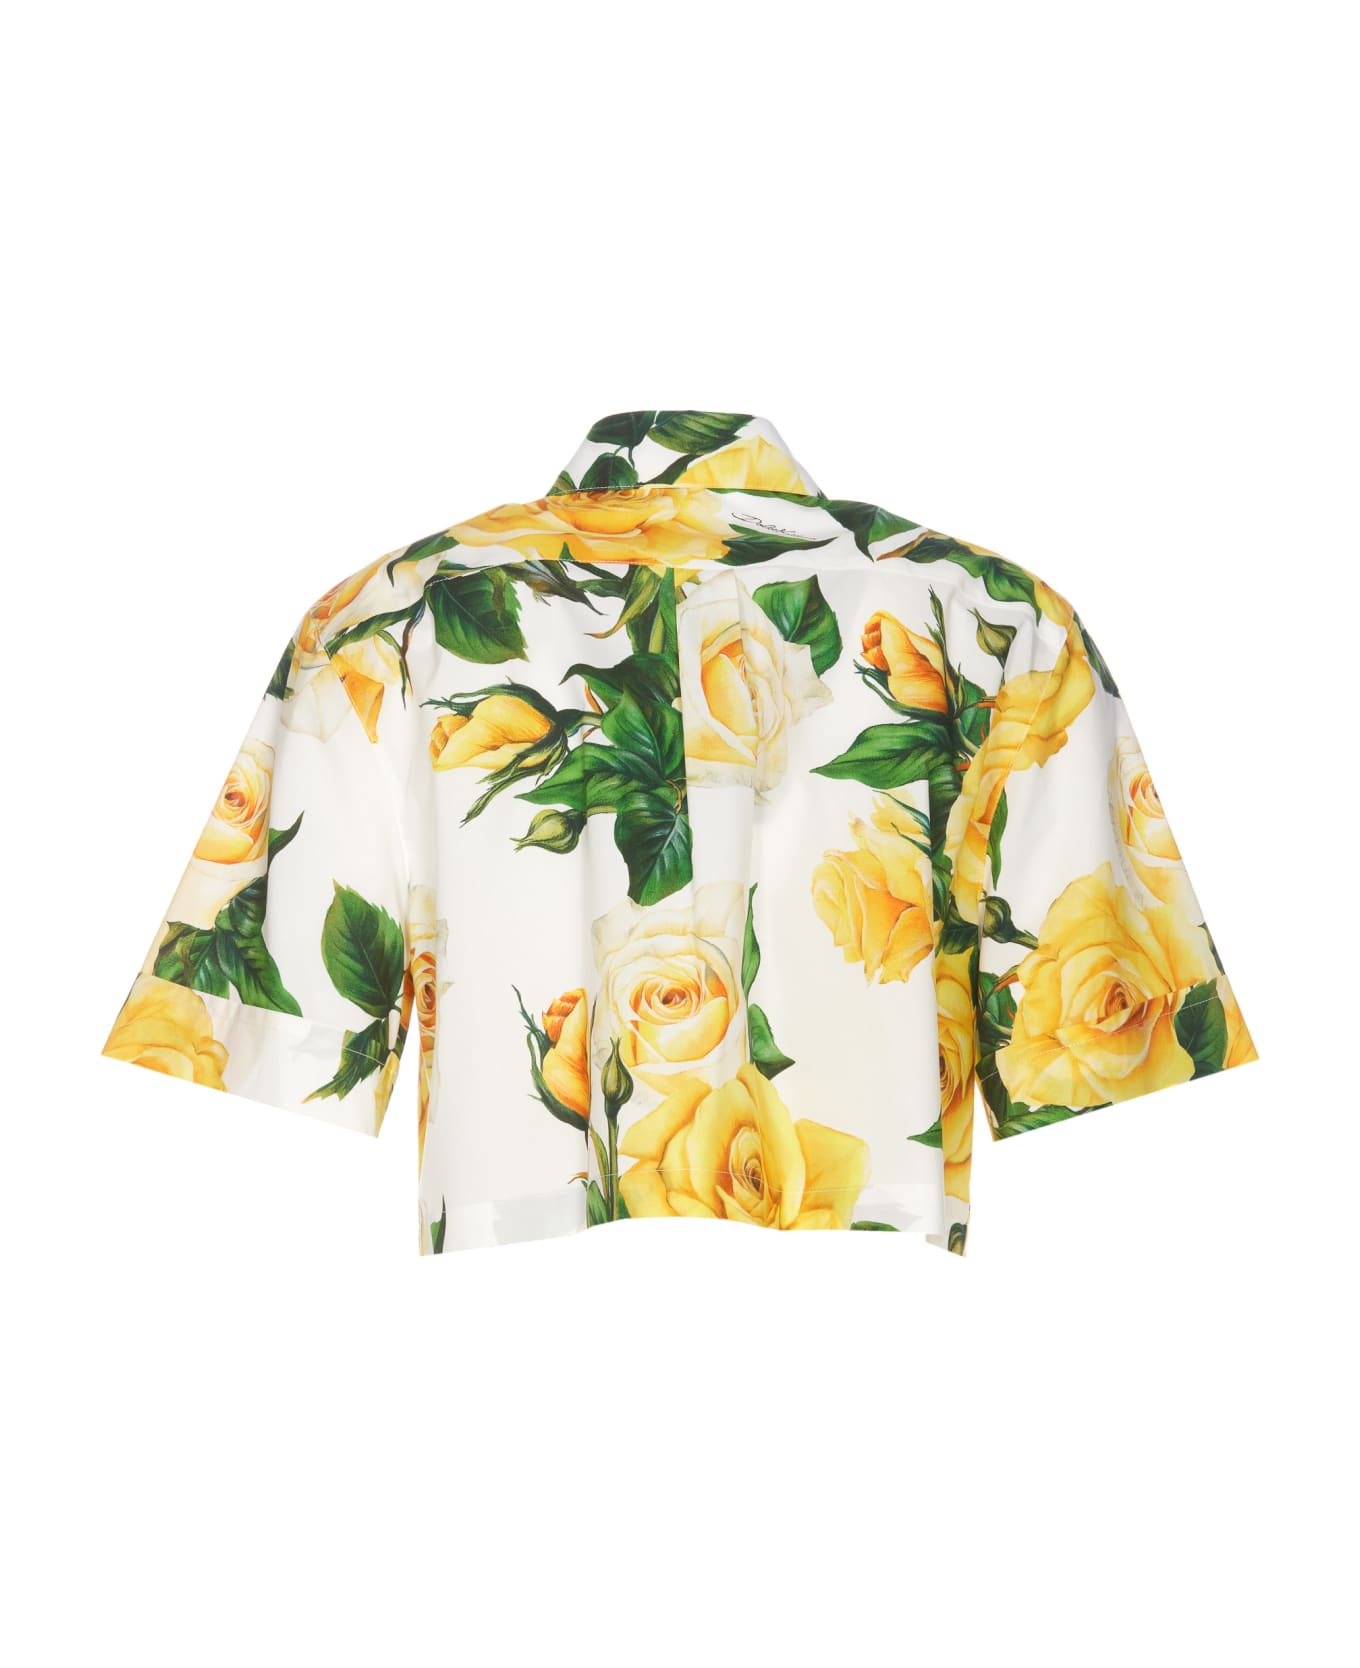 Dolce & Gabbana Roses Print Cropped Shirt - YELLOW ROSES